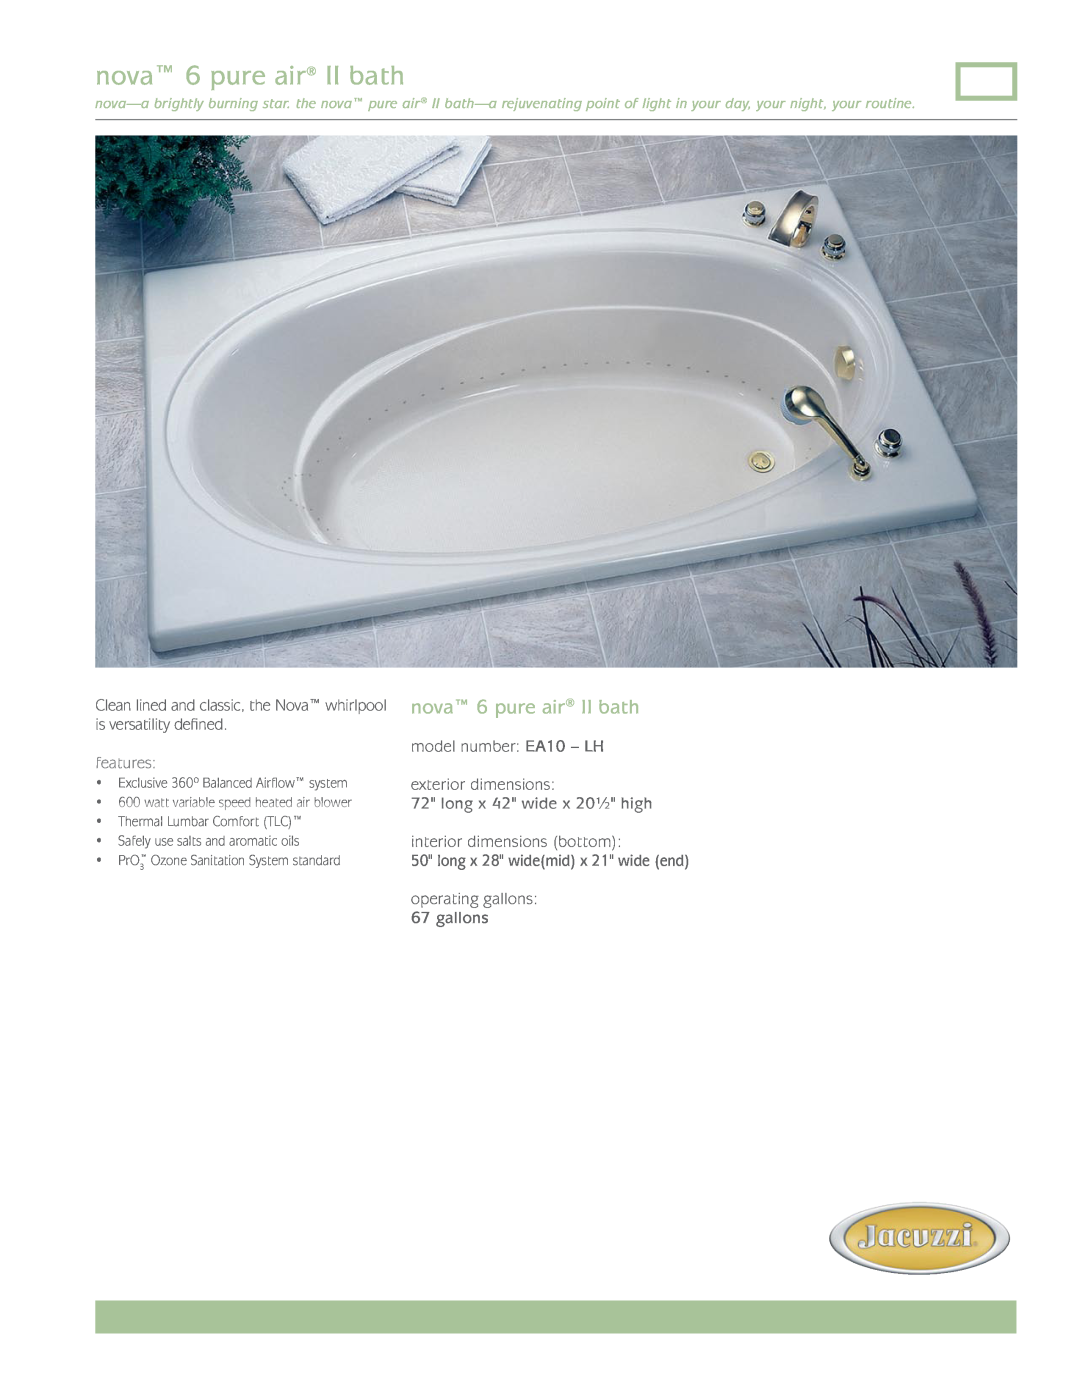 Jacuzzi FQ96 dimensions nova 6 pure air II bath, is versatility defined, features, model number EA10 - LH, gallons 